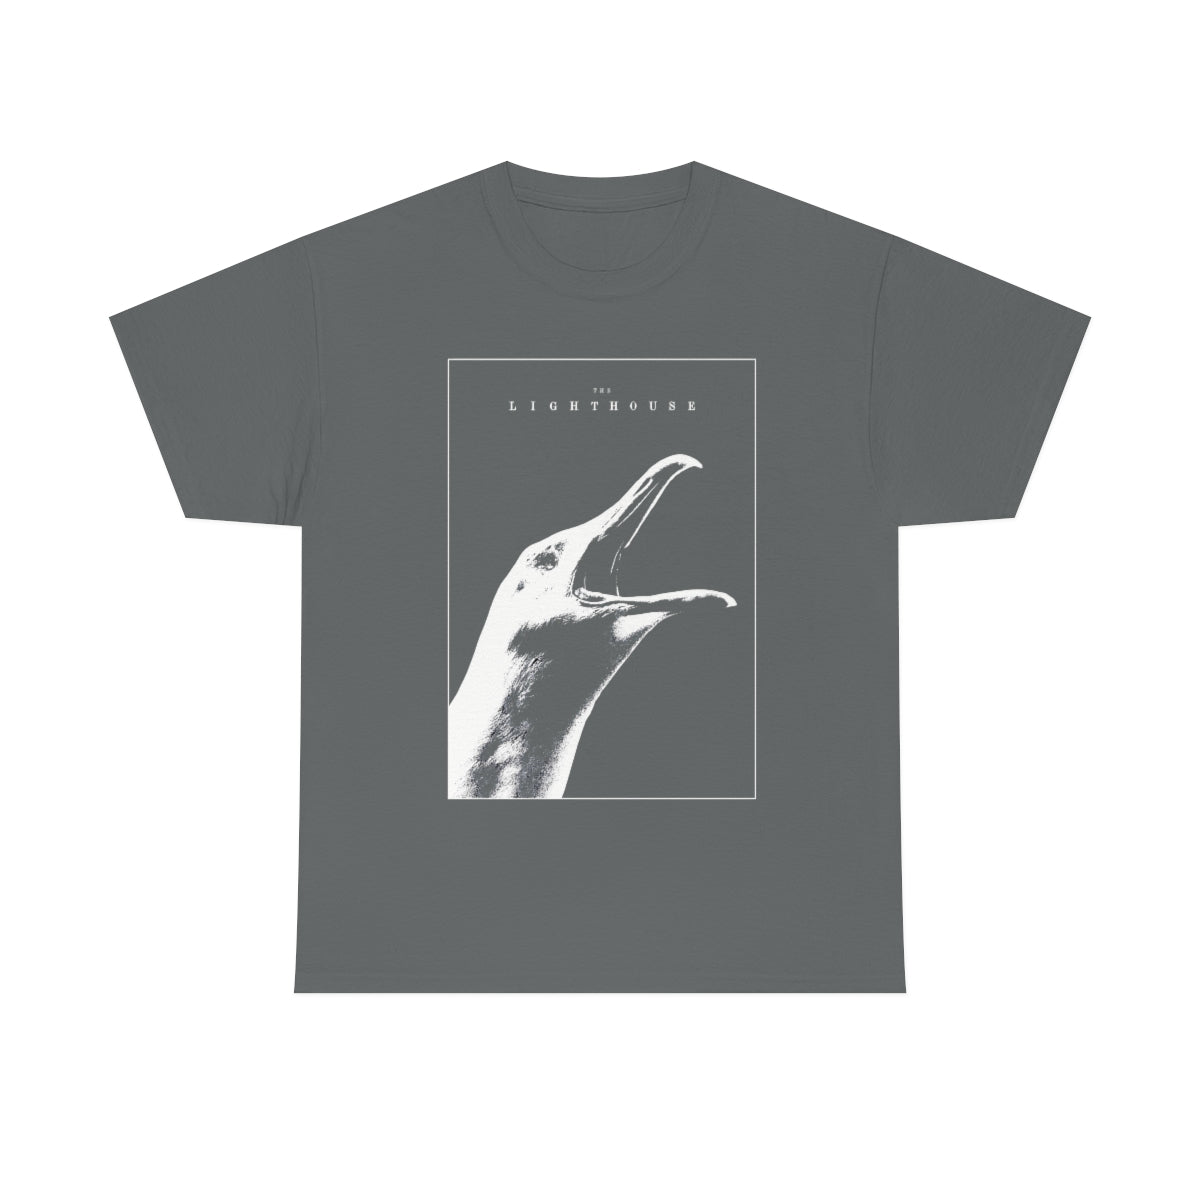 The Lighthouse T-Shirt